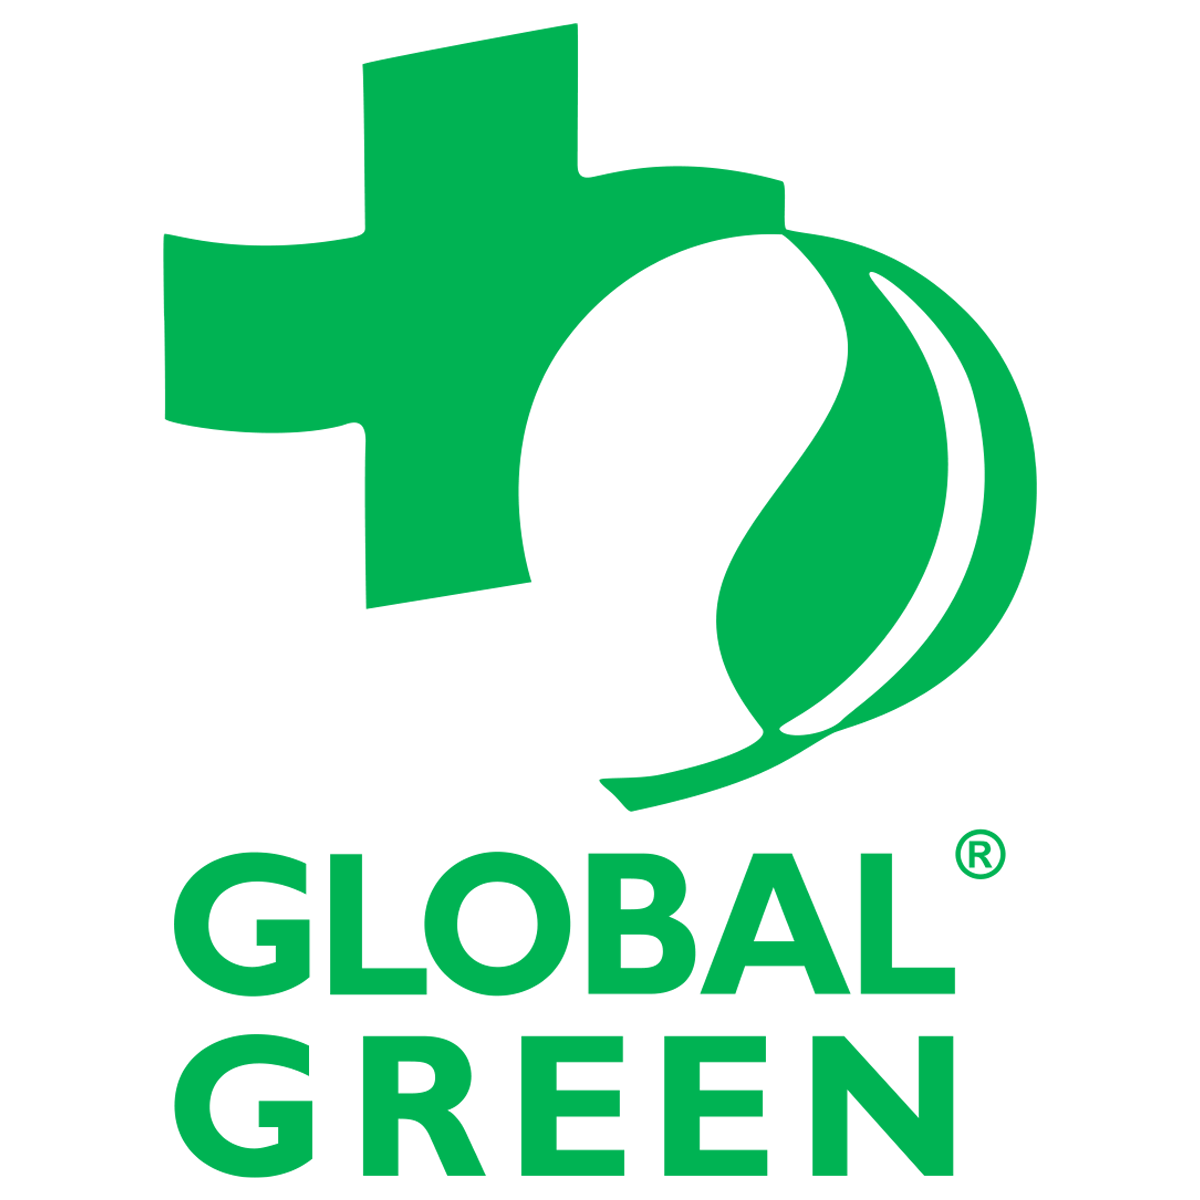 Global Green, Earth X & Earth Day 2020